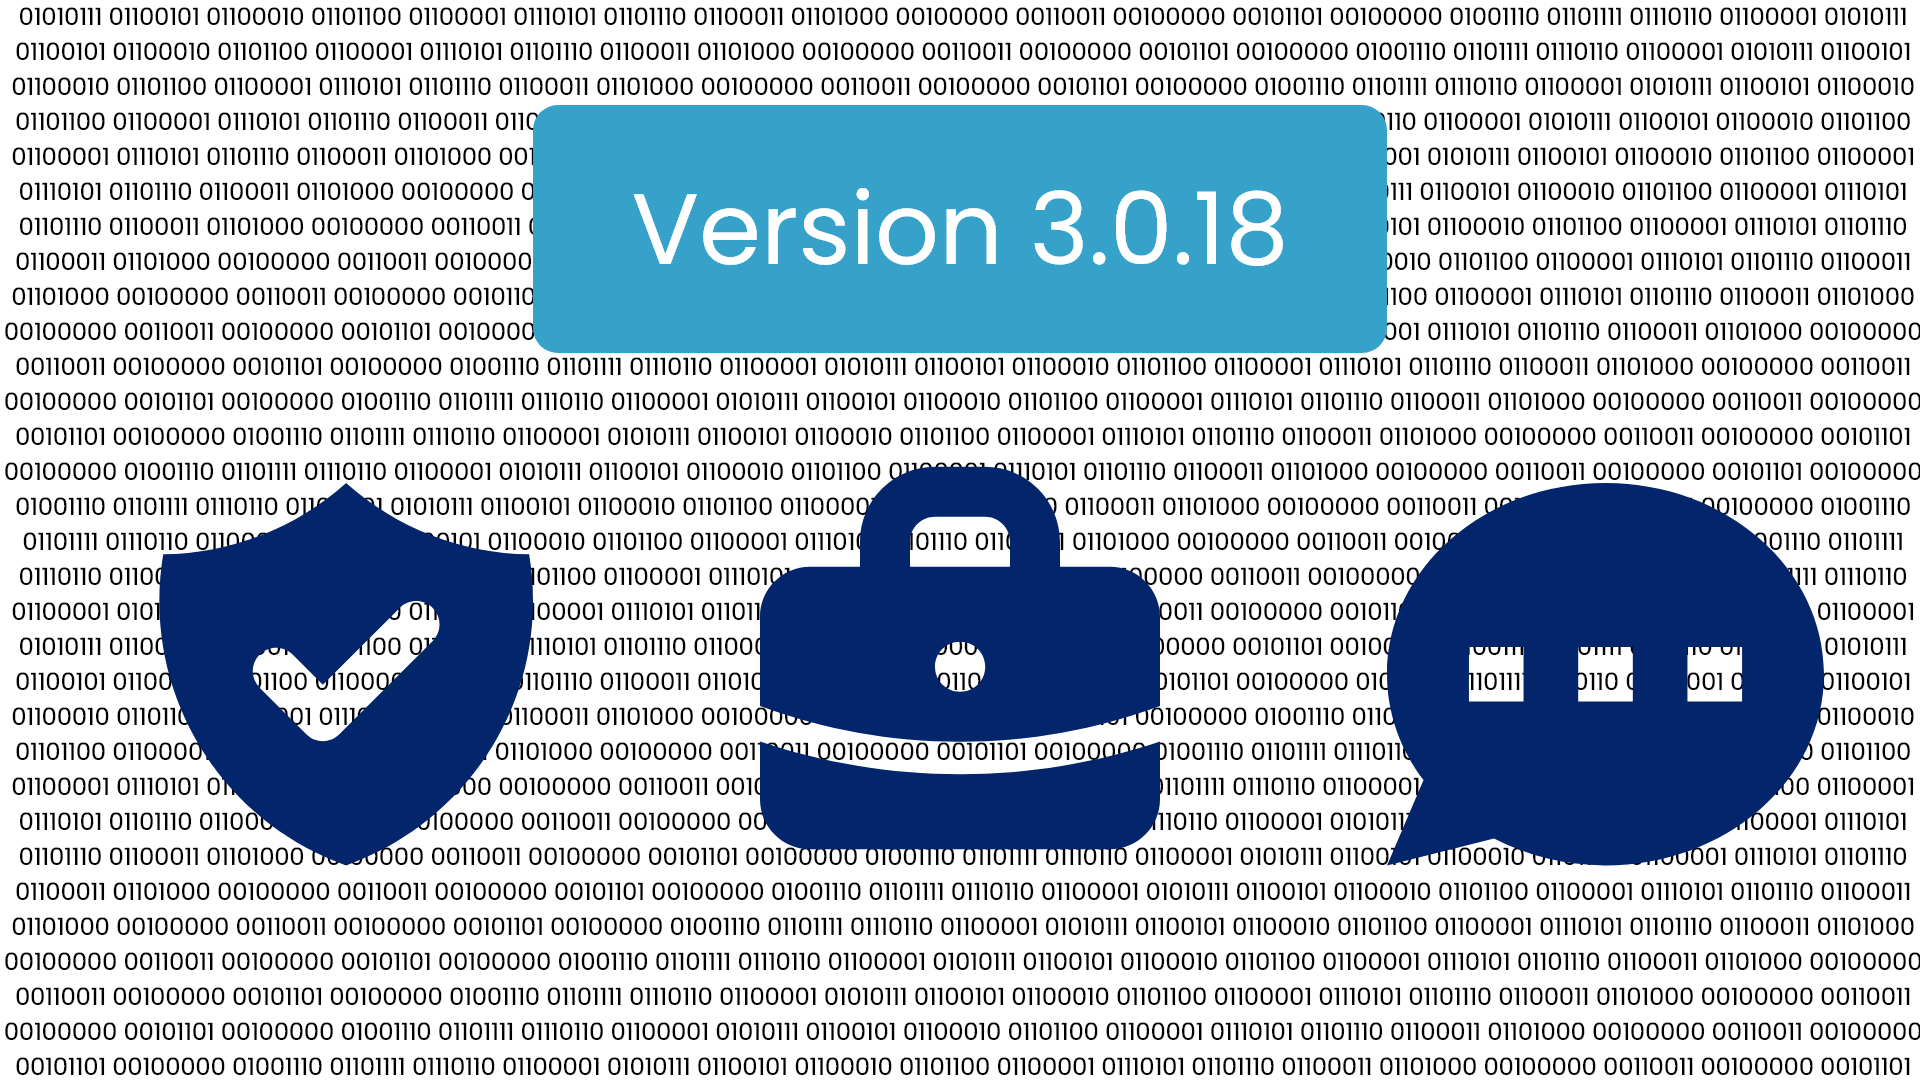 Weblaunch Beta 3.0.18 released